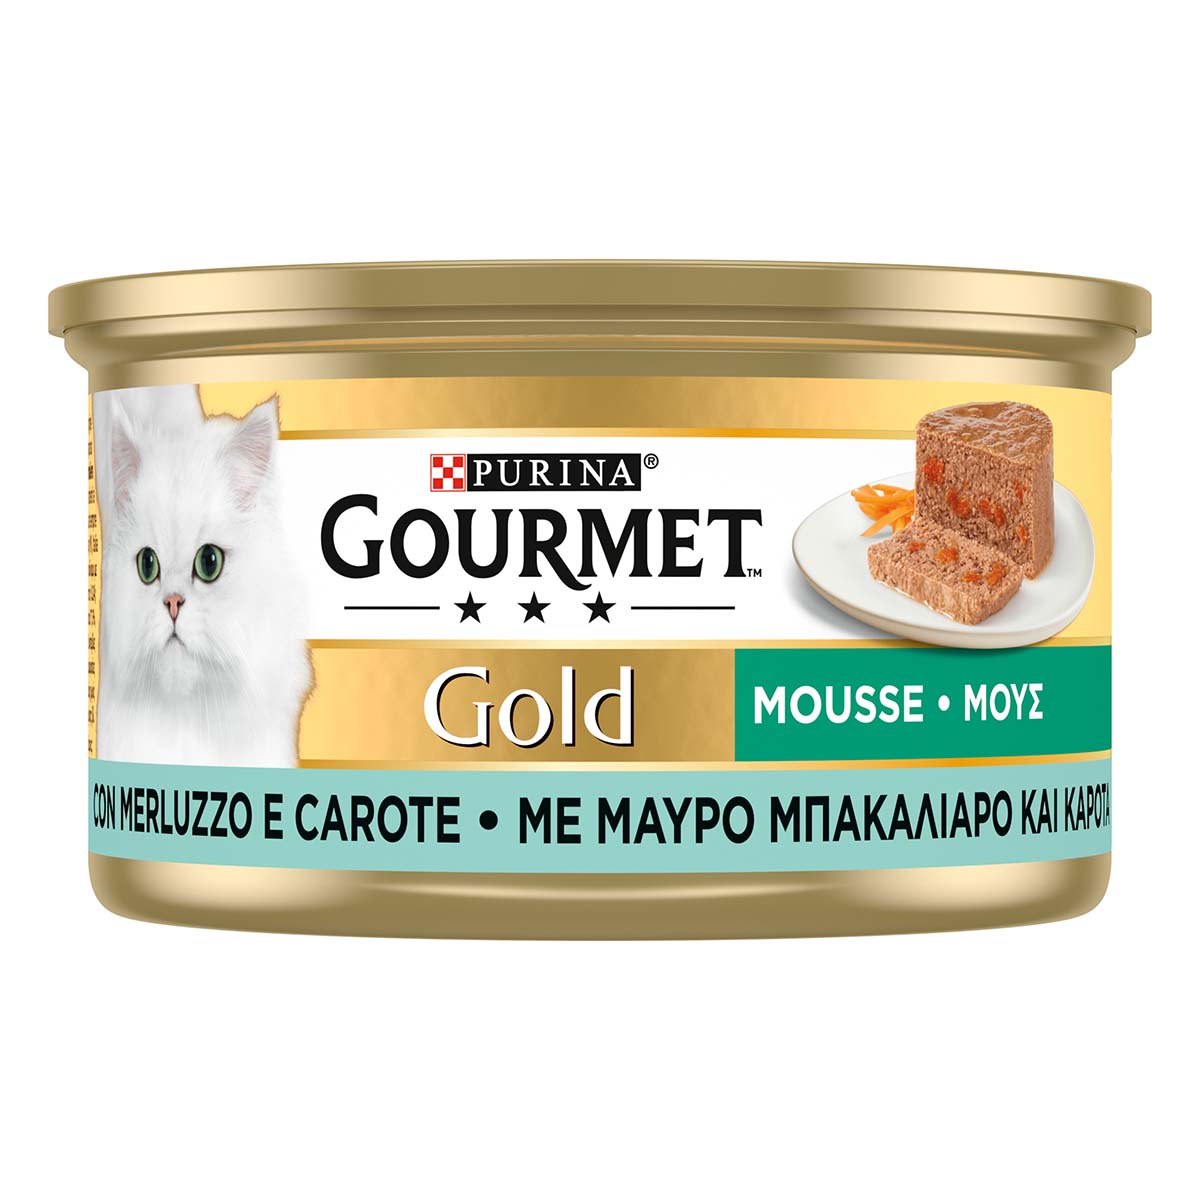 GOURMET GOLD Mousse con merluzzo e delicate carote